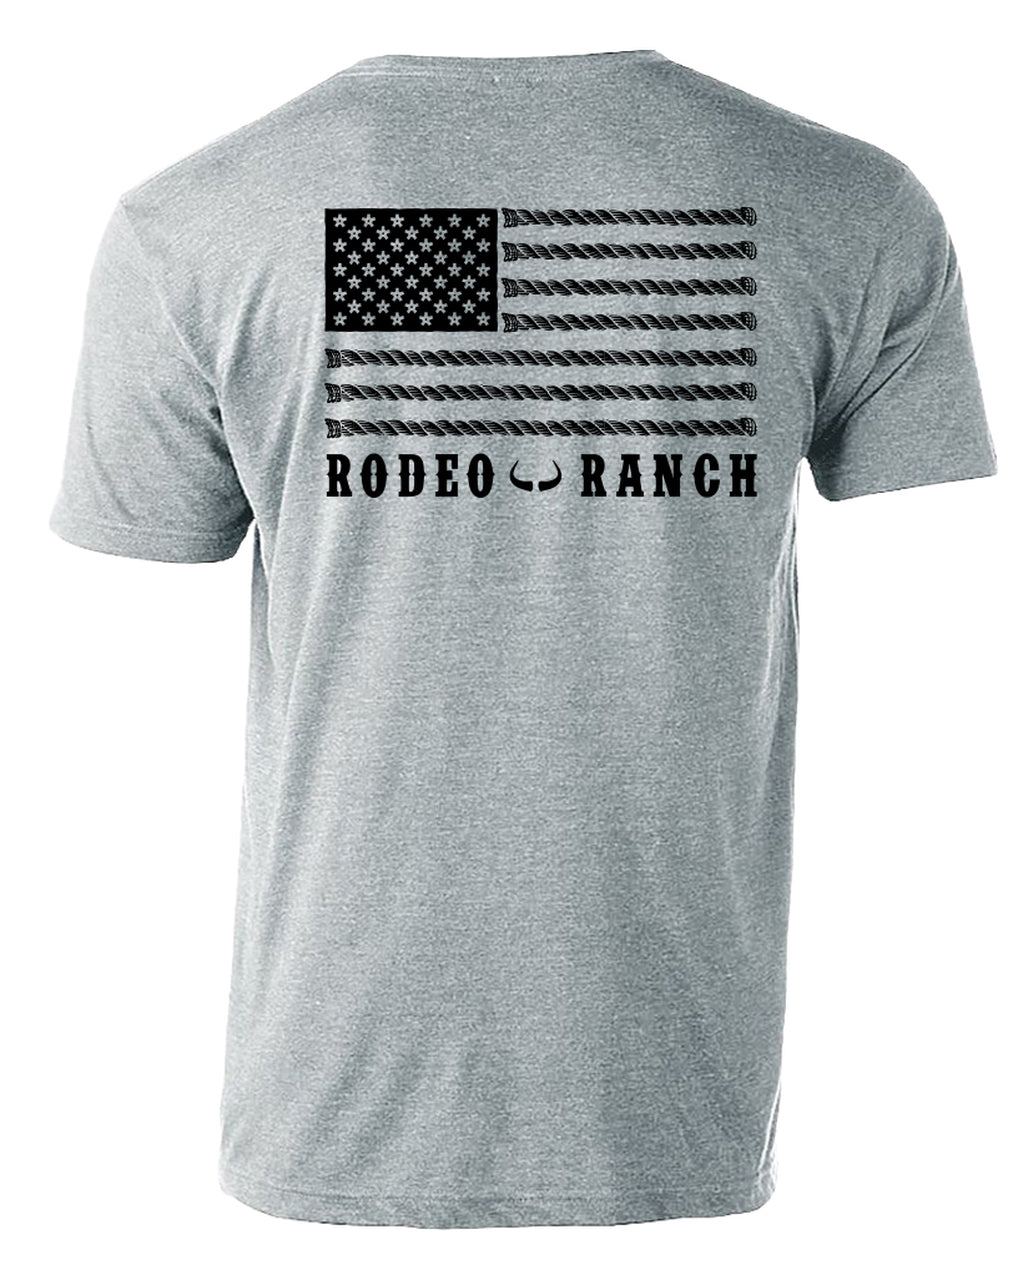 Rodeo Ranch Spur Flag Short Sleeve Shirt - Heather Grey